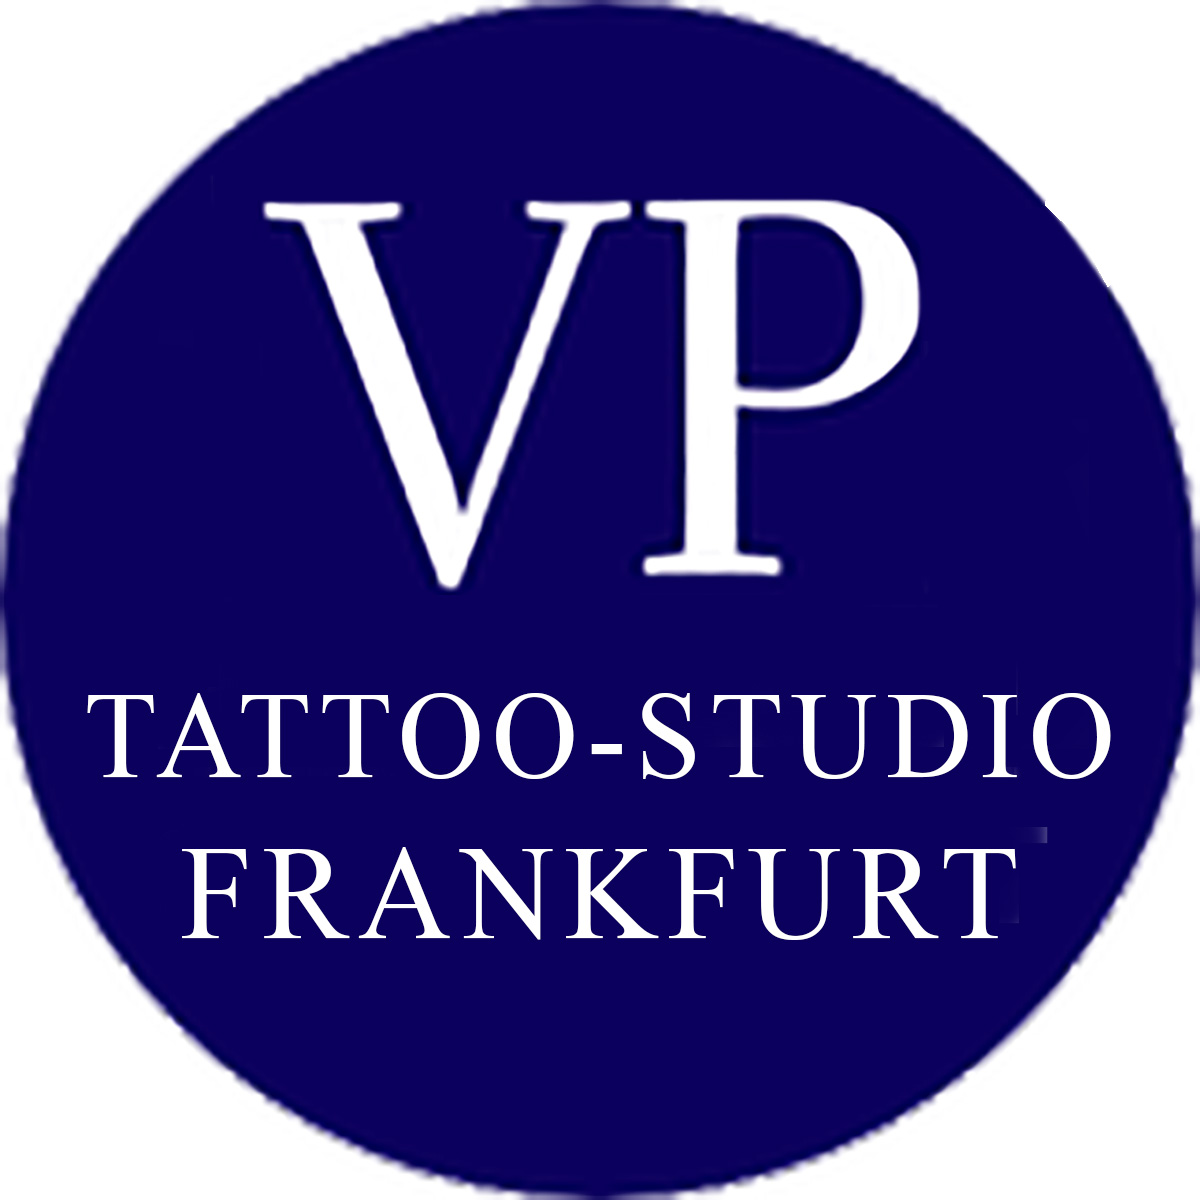 (c) Tattoo-studio-frankfurt.de